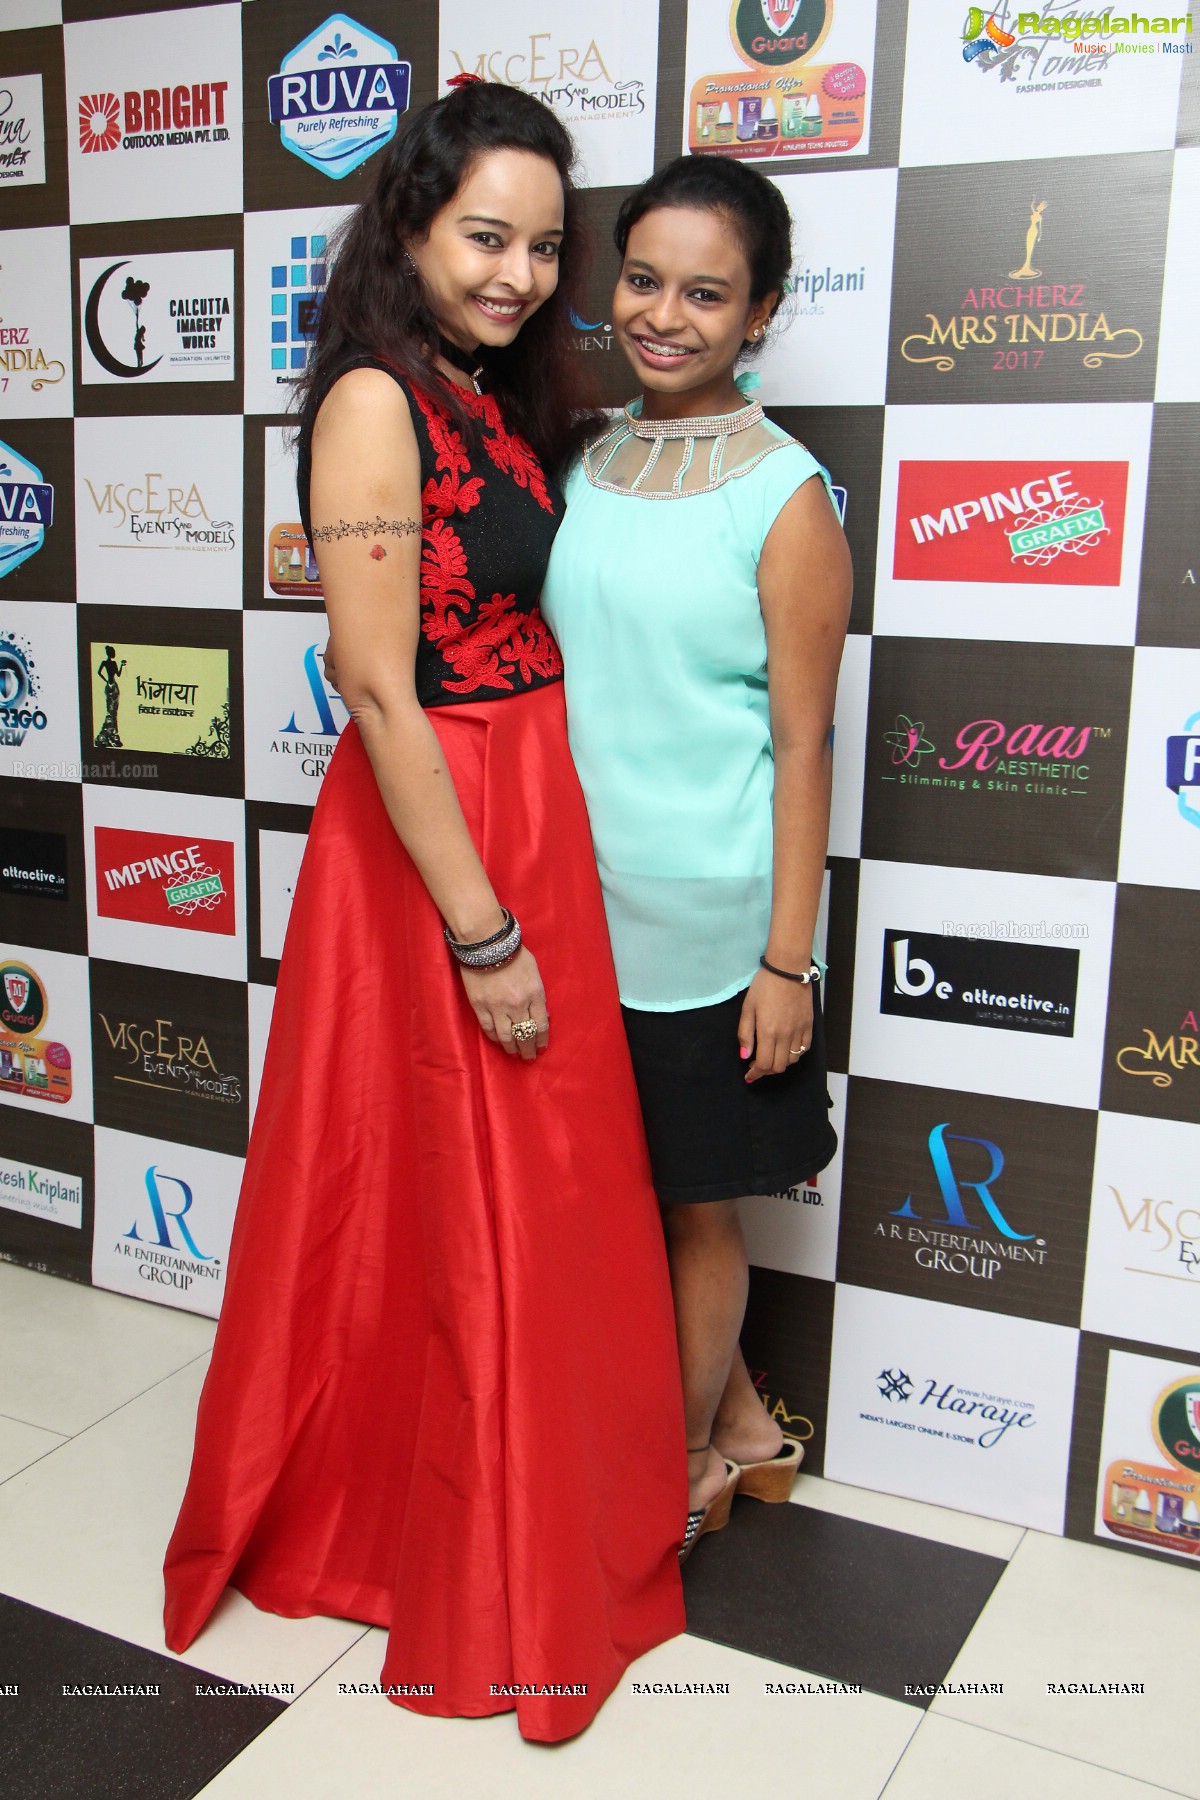 Archerz Mrs India 2017 Auditions at Frydayz Lounge  Sun Towers, Hitech City, Hyderabad